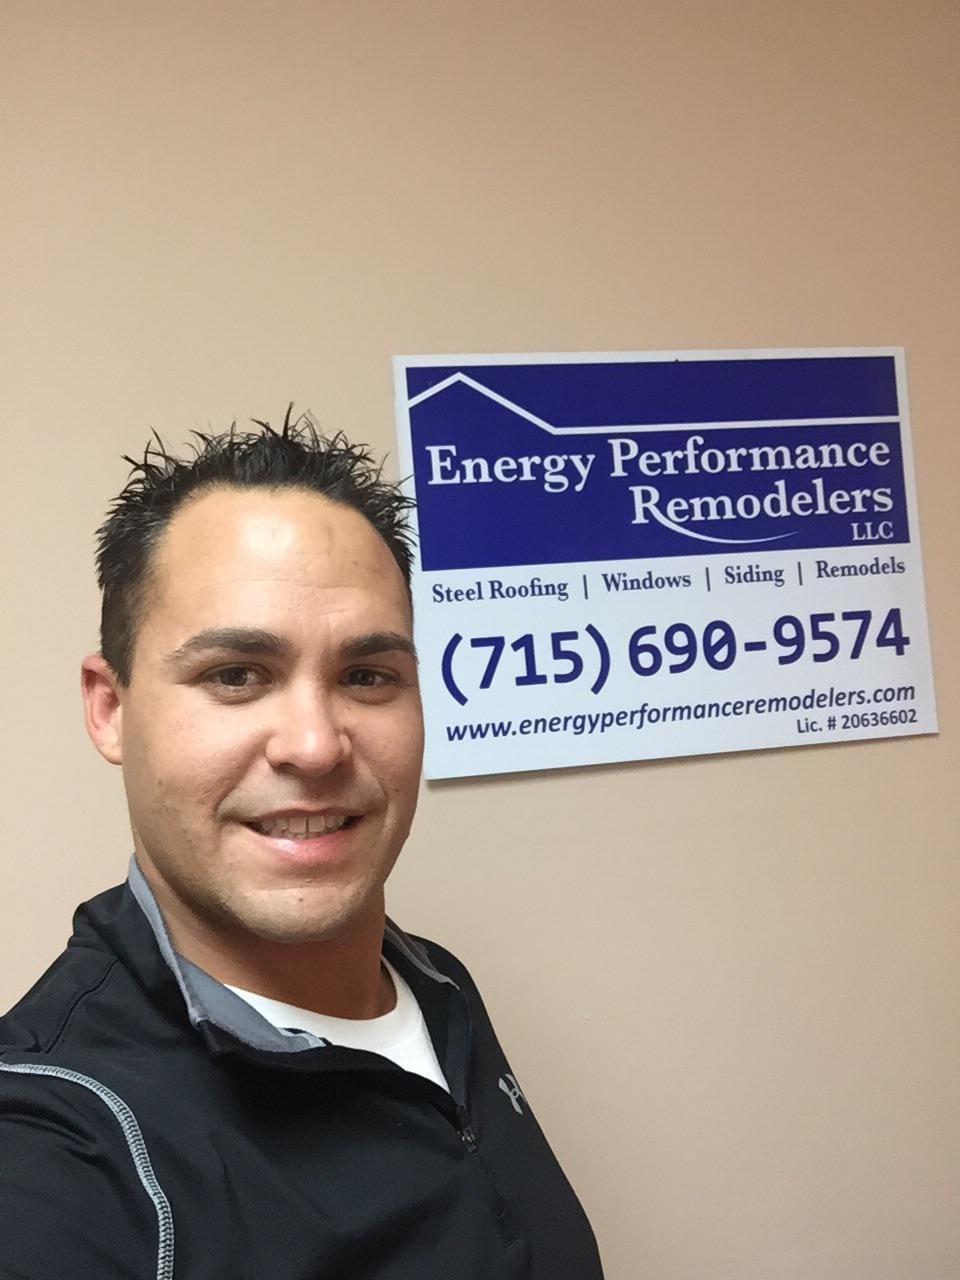 Energy Performance Remodelers, LLC